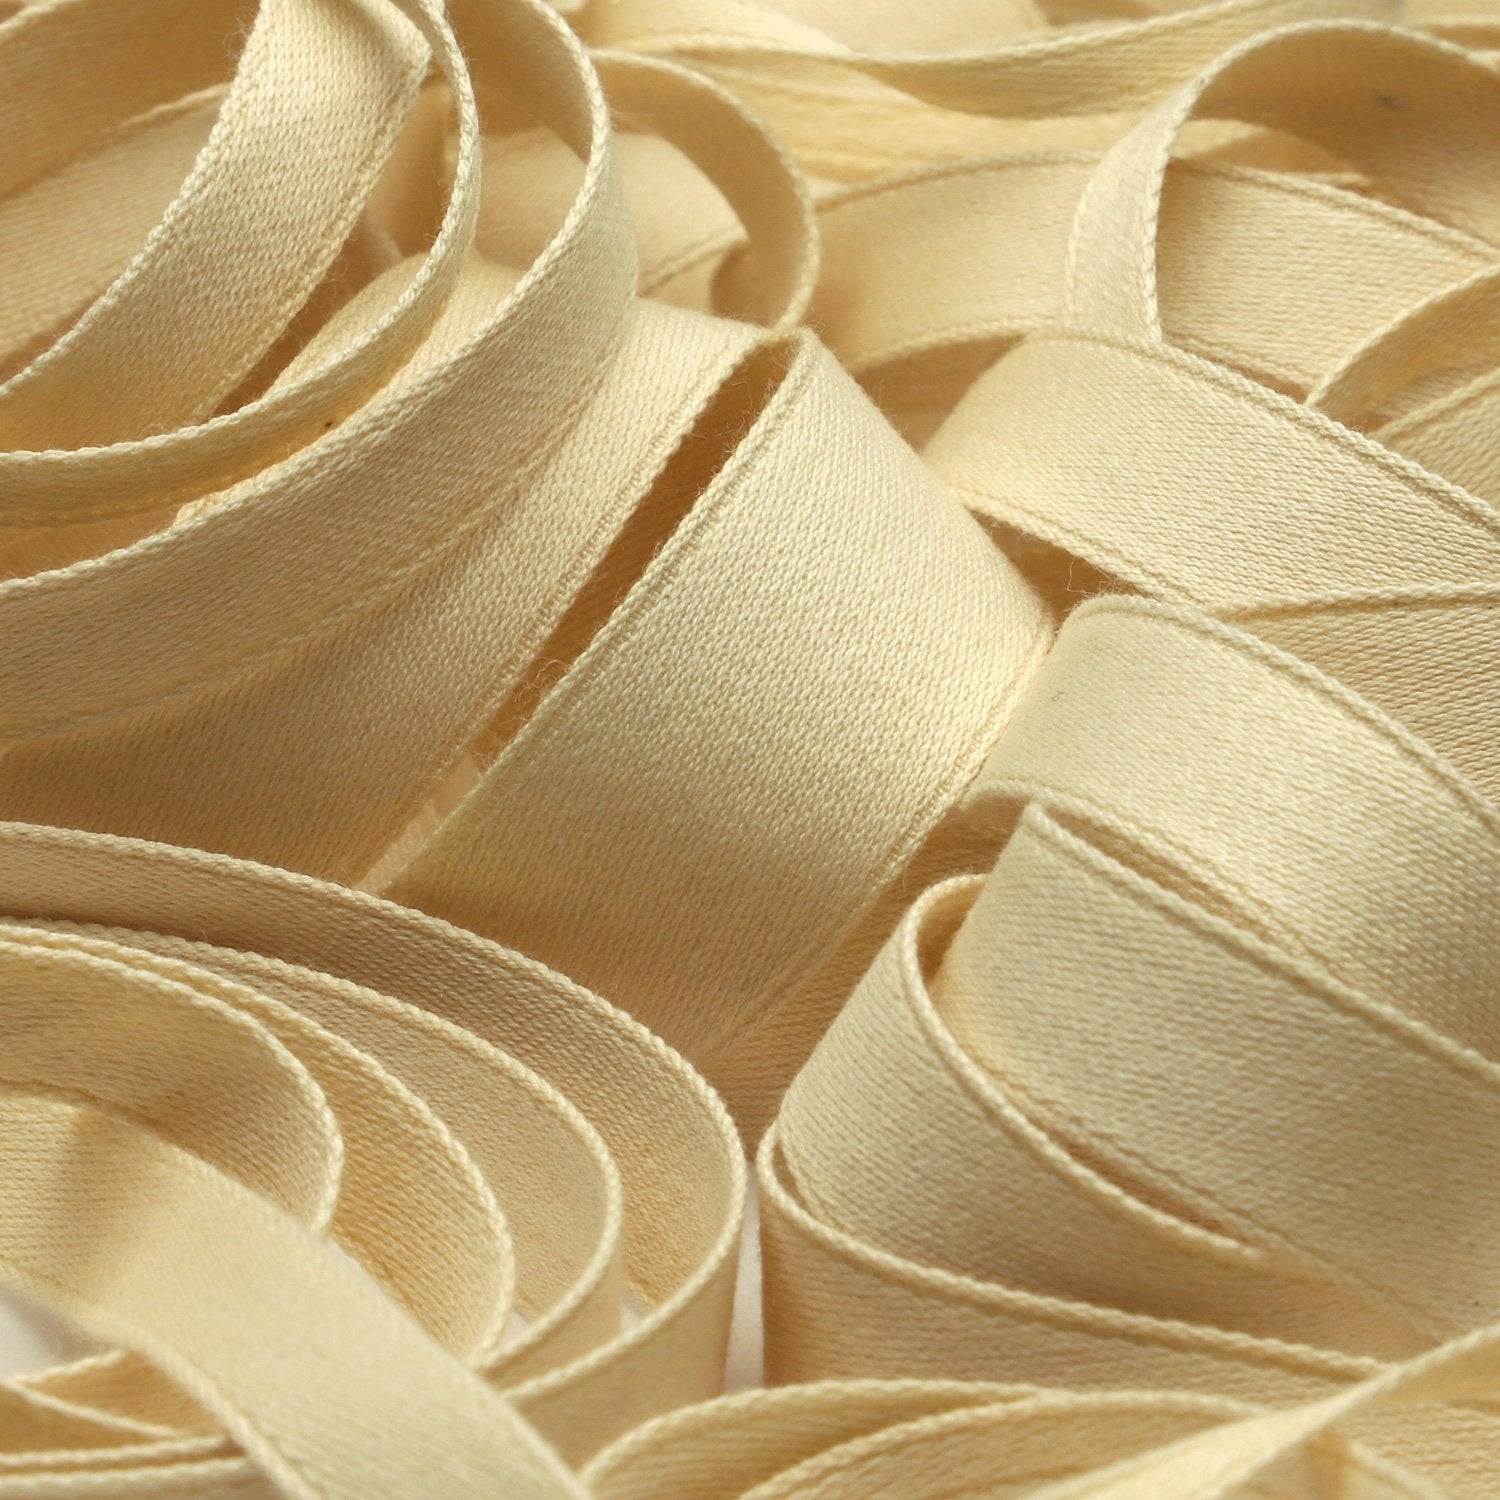 FUJIYAMA RIBBON [Wholesale] Organic Cotton Double-Face Satin Ribbon 12mm Ecru 30 Meters Roll